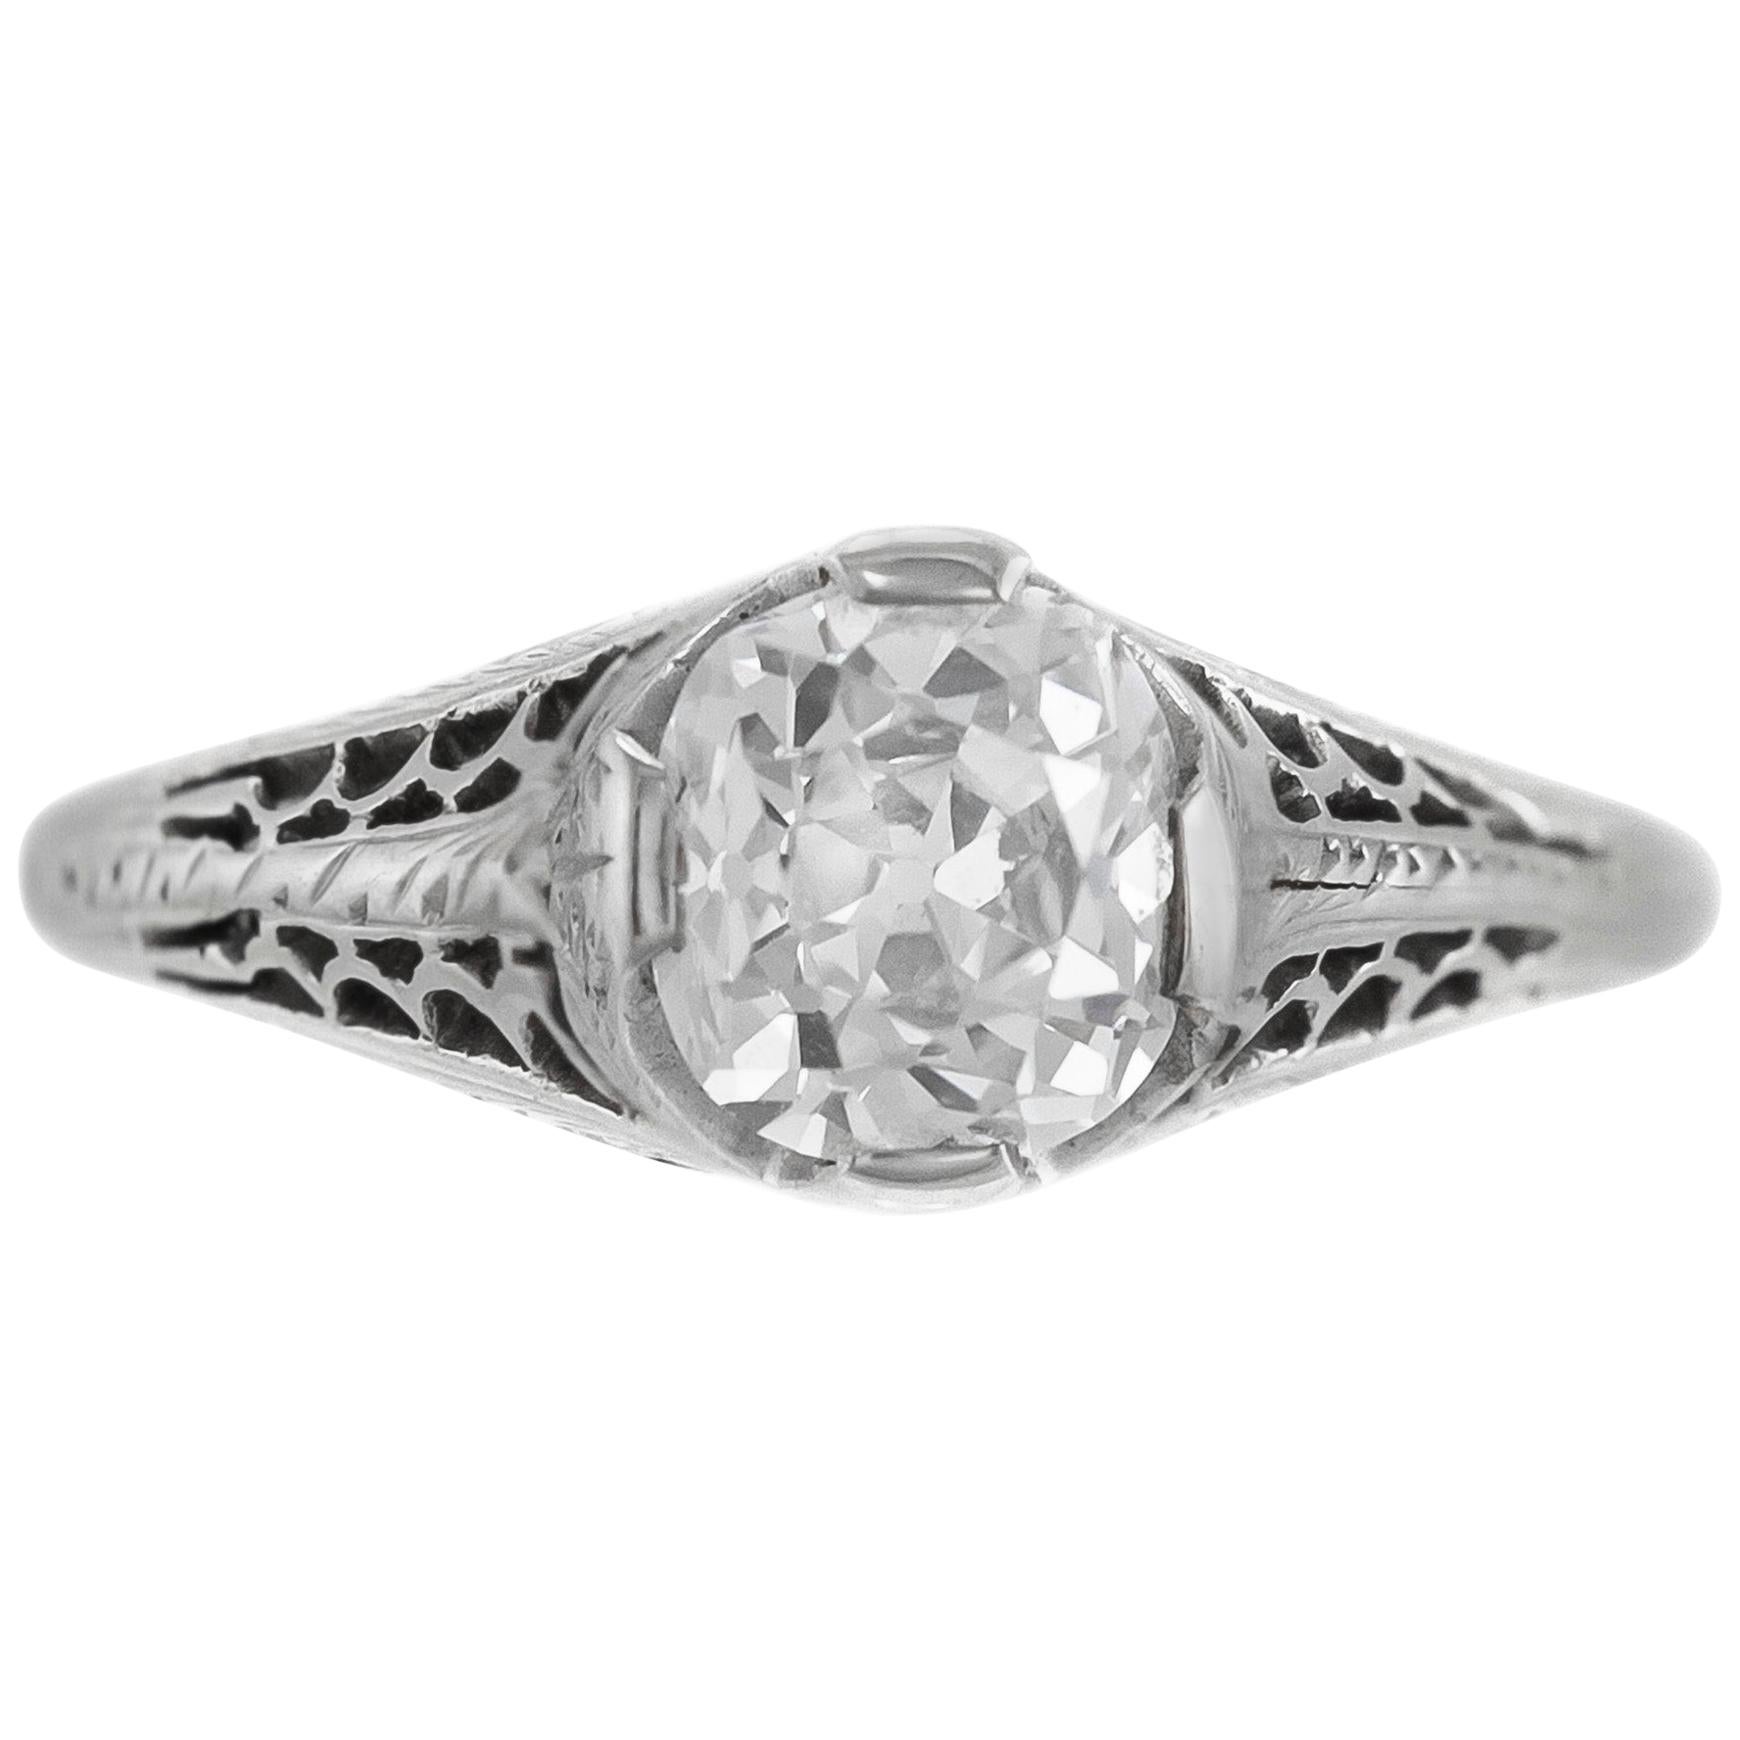 1920s-1930s Beautiful Filigree with One Round Diamond Engagement Ring